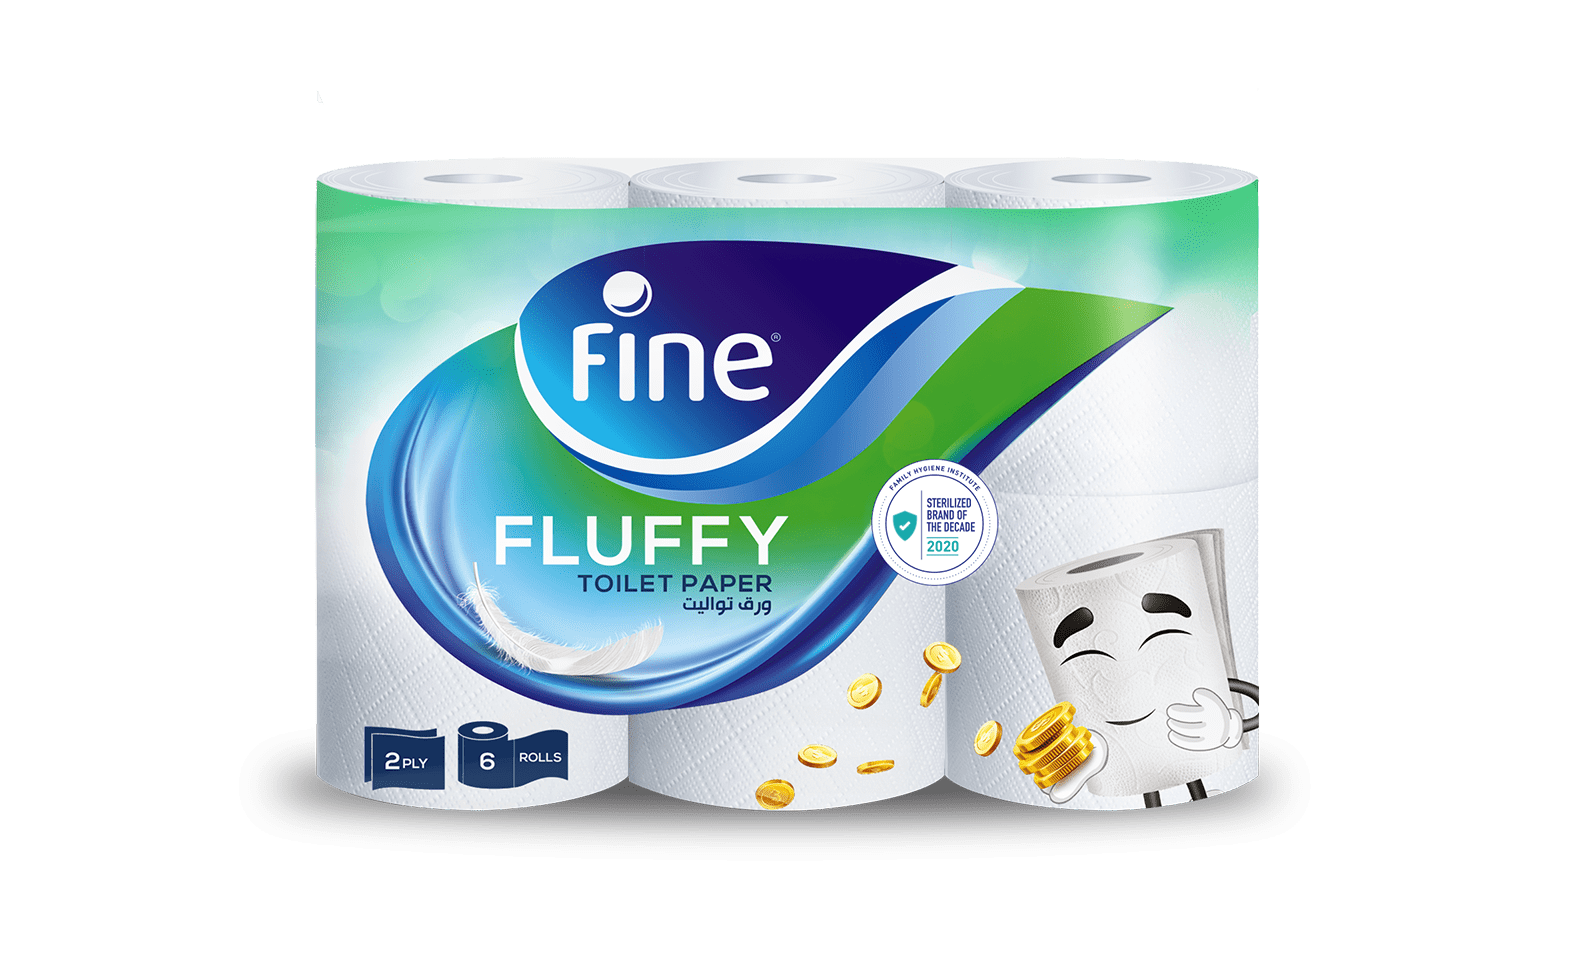 Fine Fluffy Toilet Paper Image